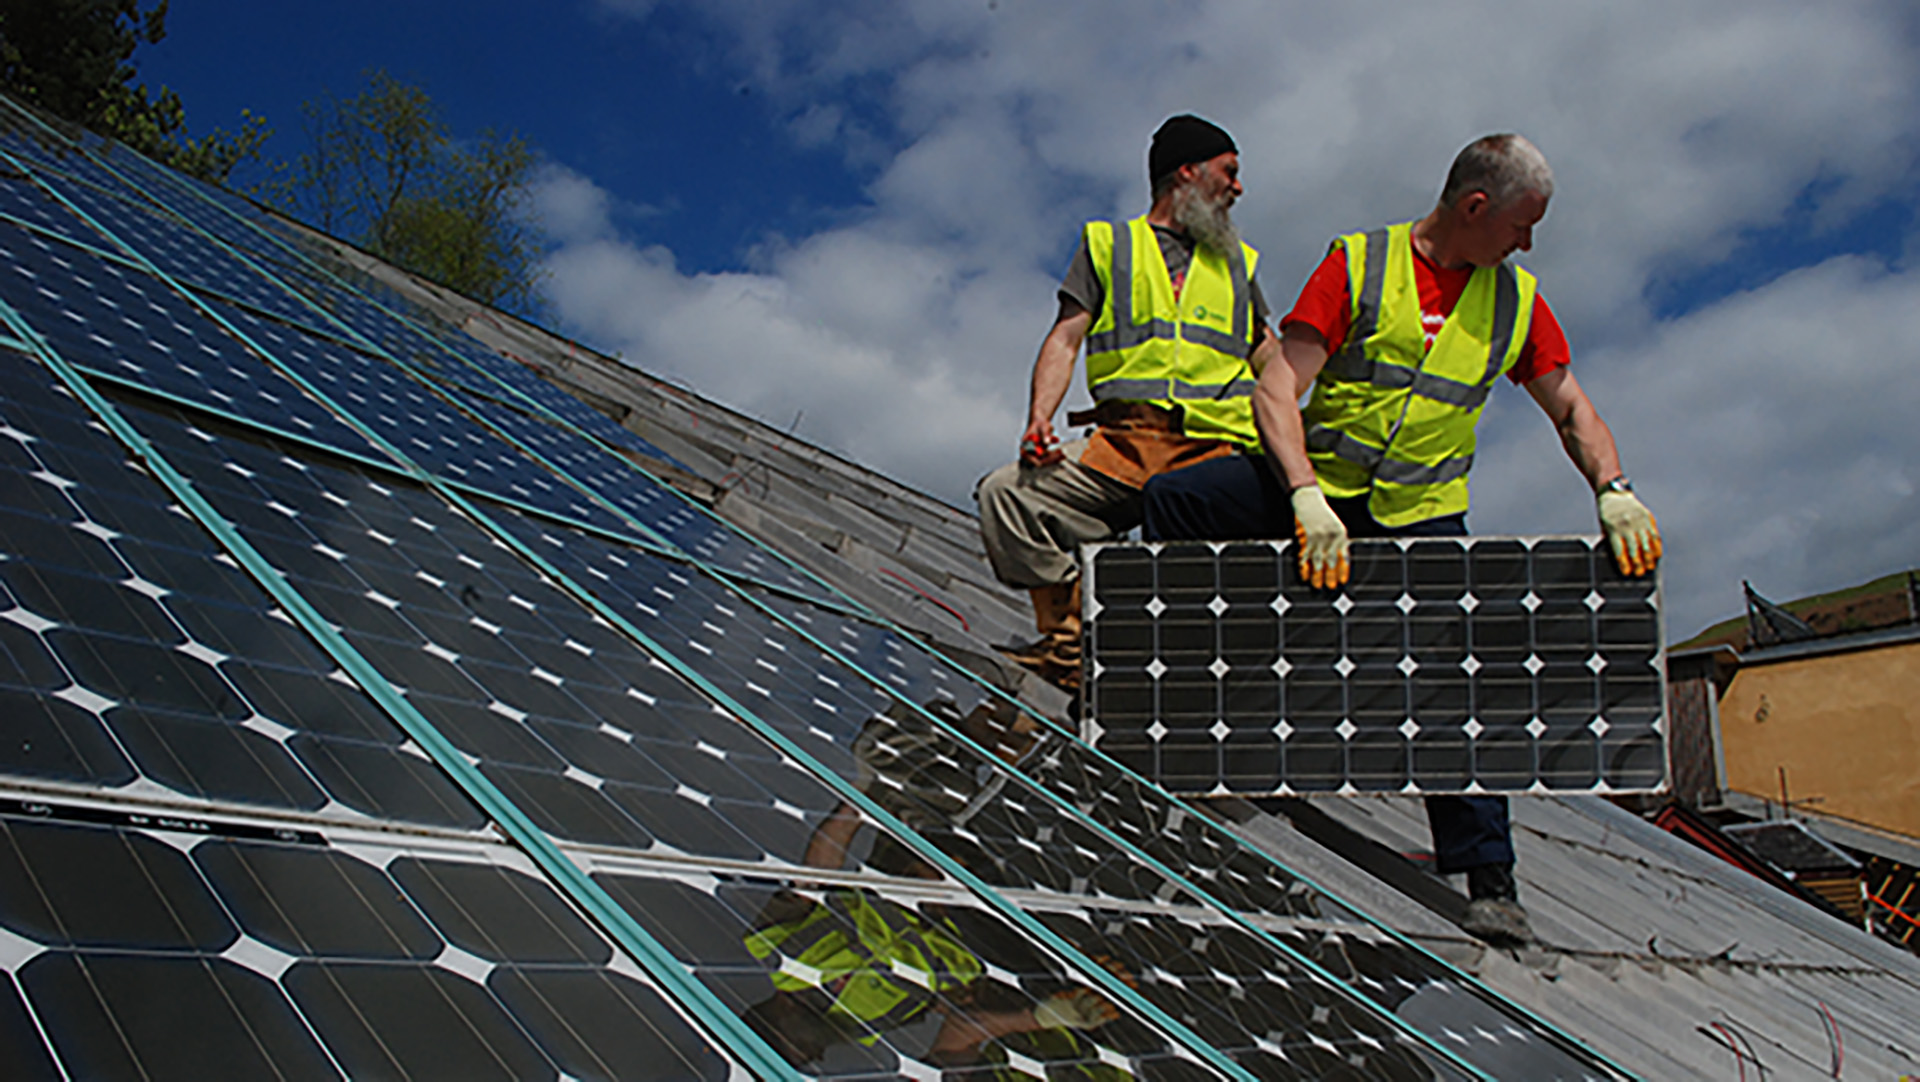 Installing Solar PV panels